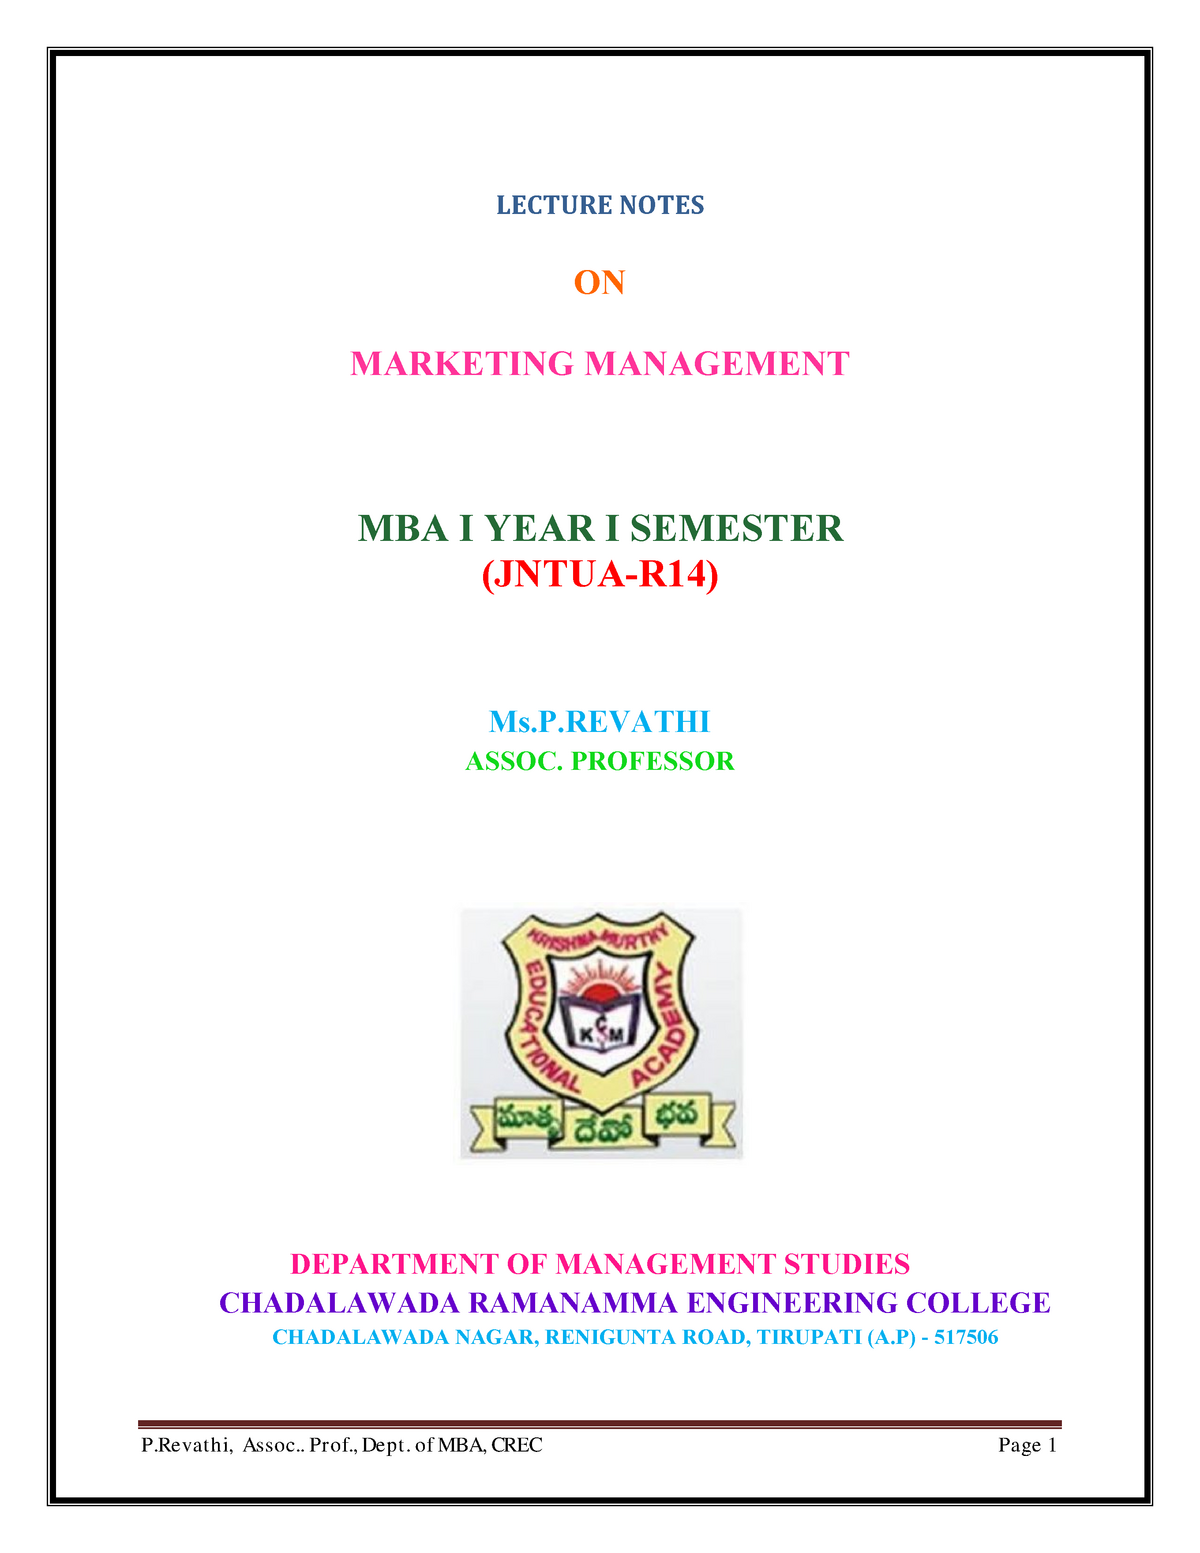 Marketing Management - Anna University] - masters in business - StuDocu